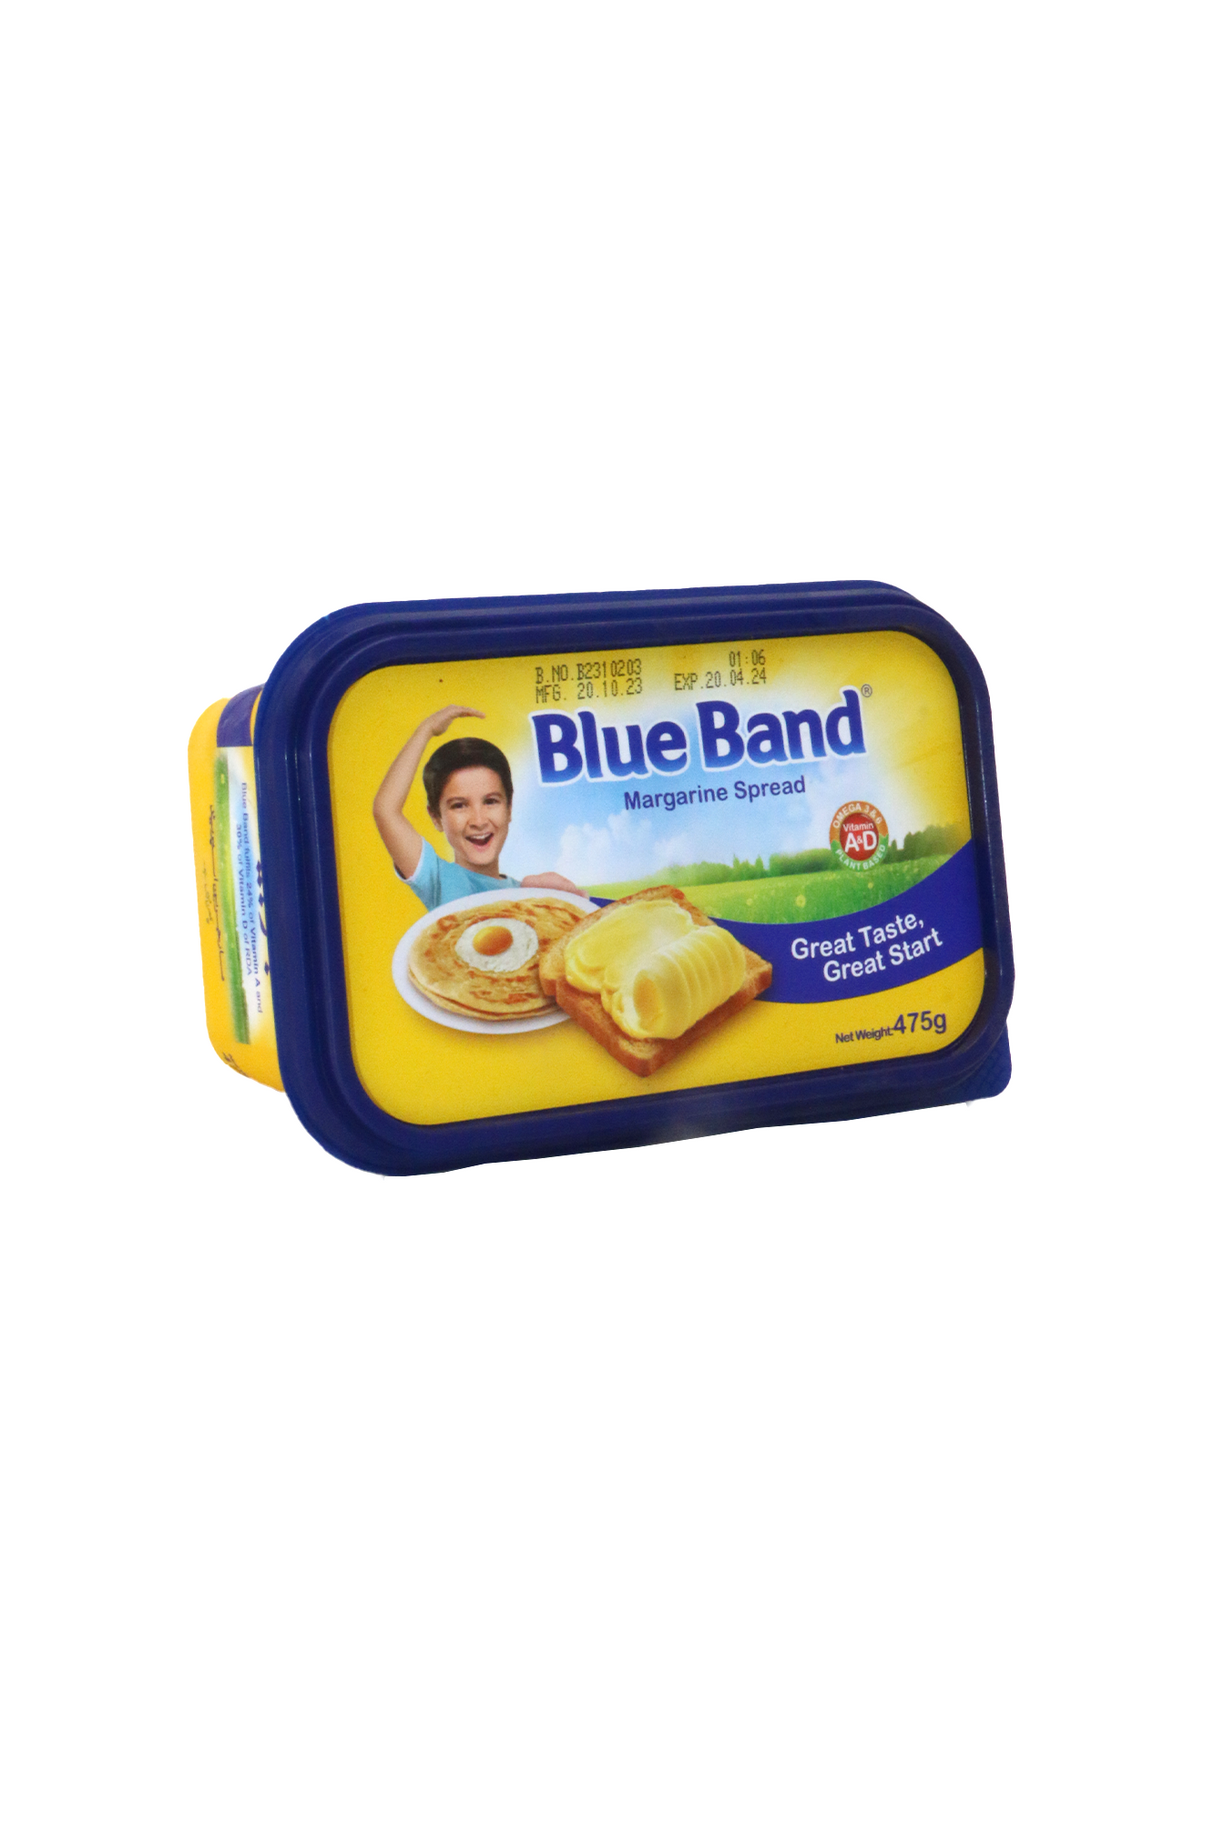 blue band 475g